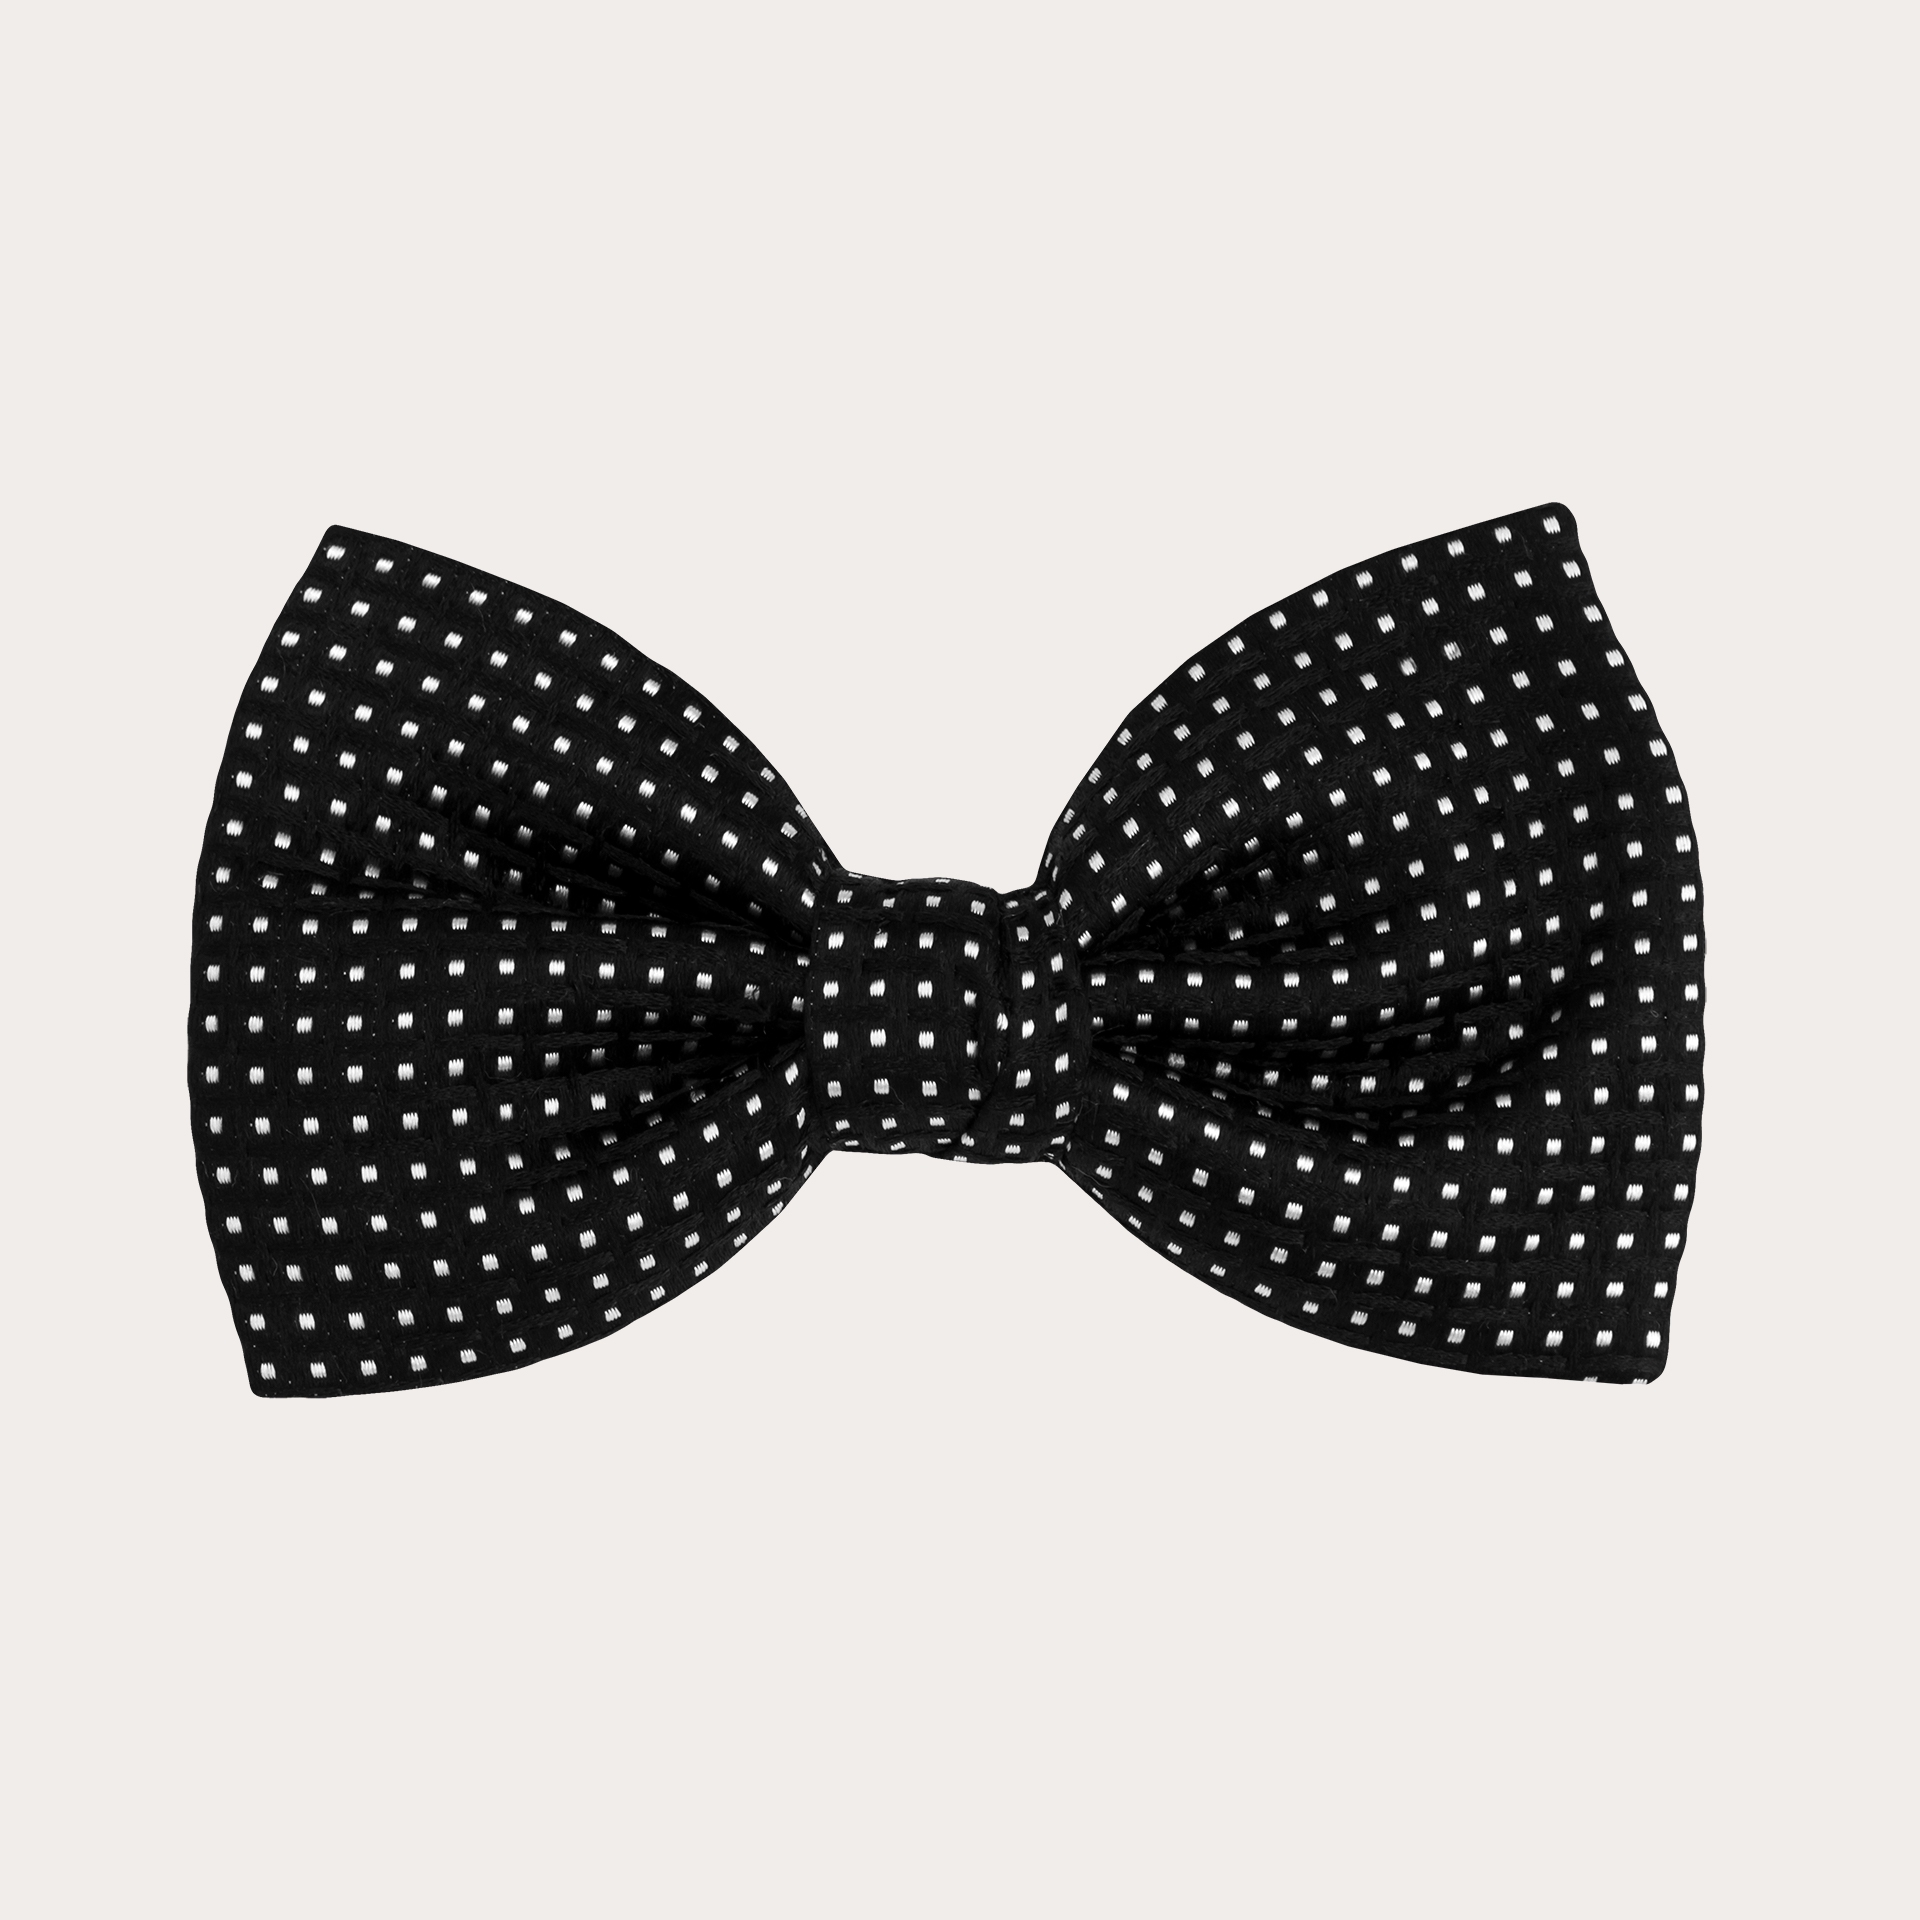 BRUCLE Elegant bow tie in jacquard silk, black with geometric pincushion motif